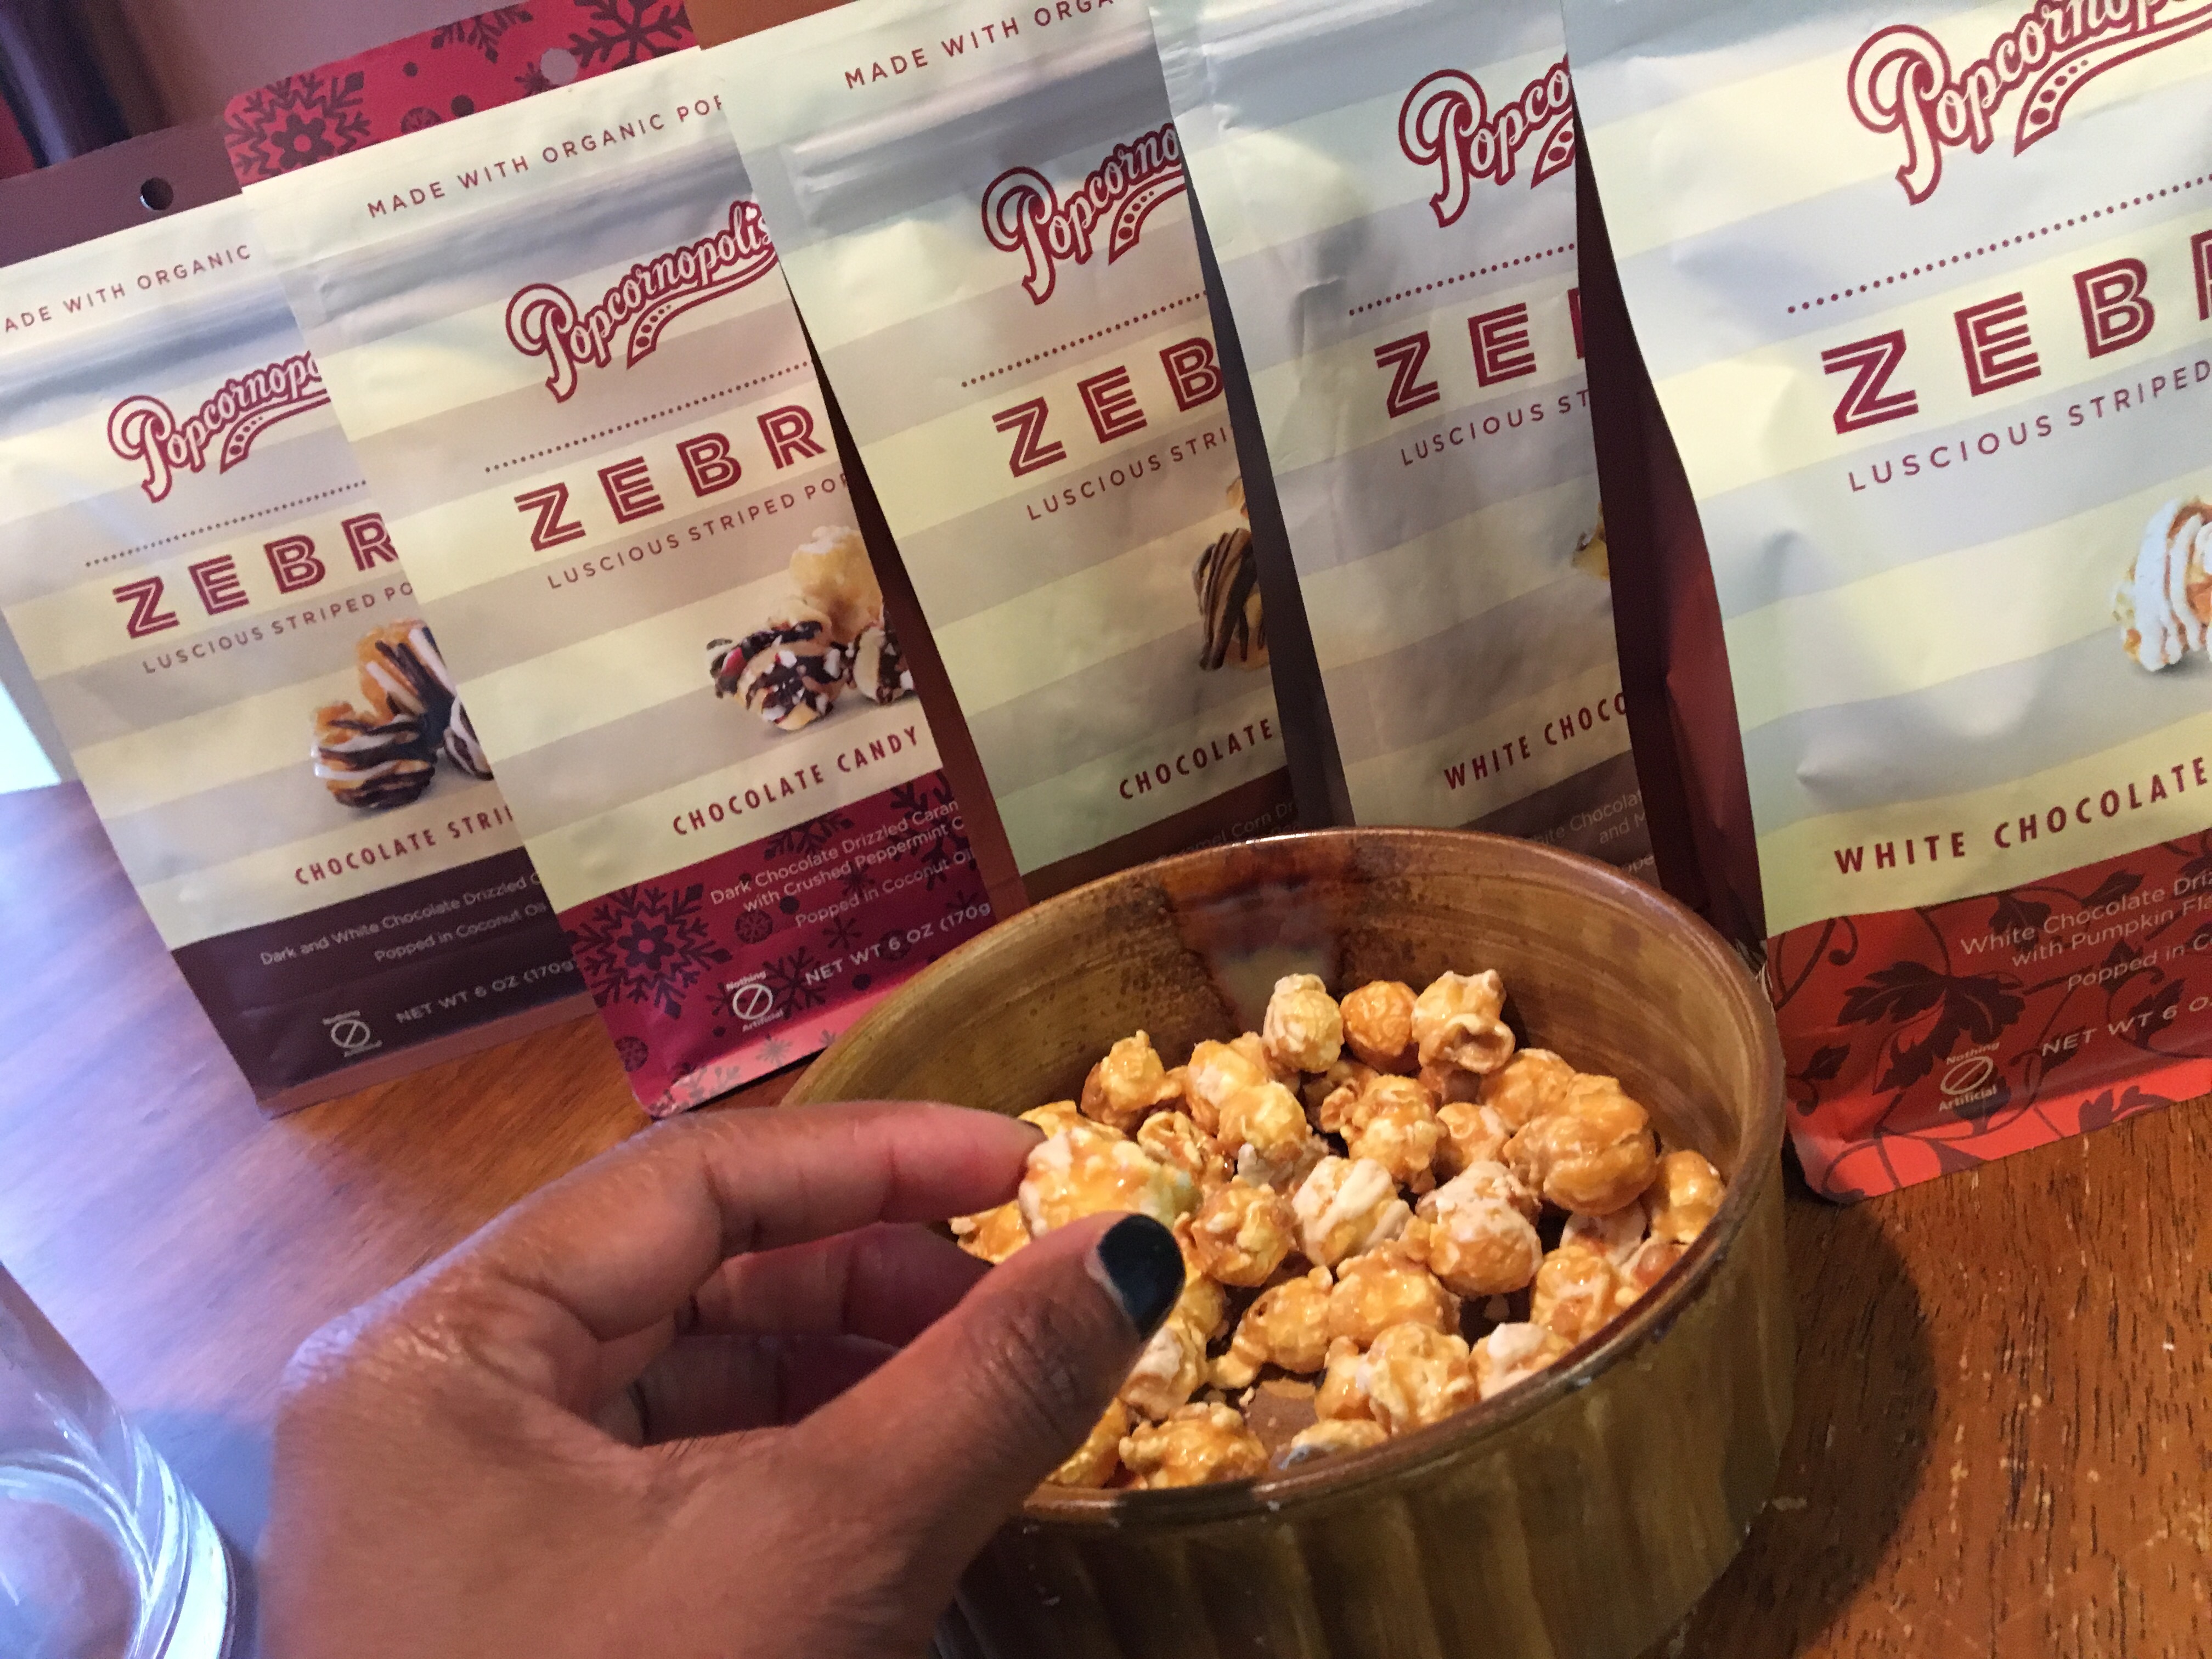 Popcornopolis Zebra Popcorn – The Best Gourmet Popcorn